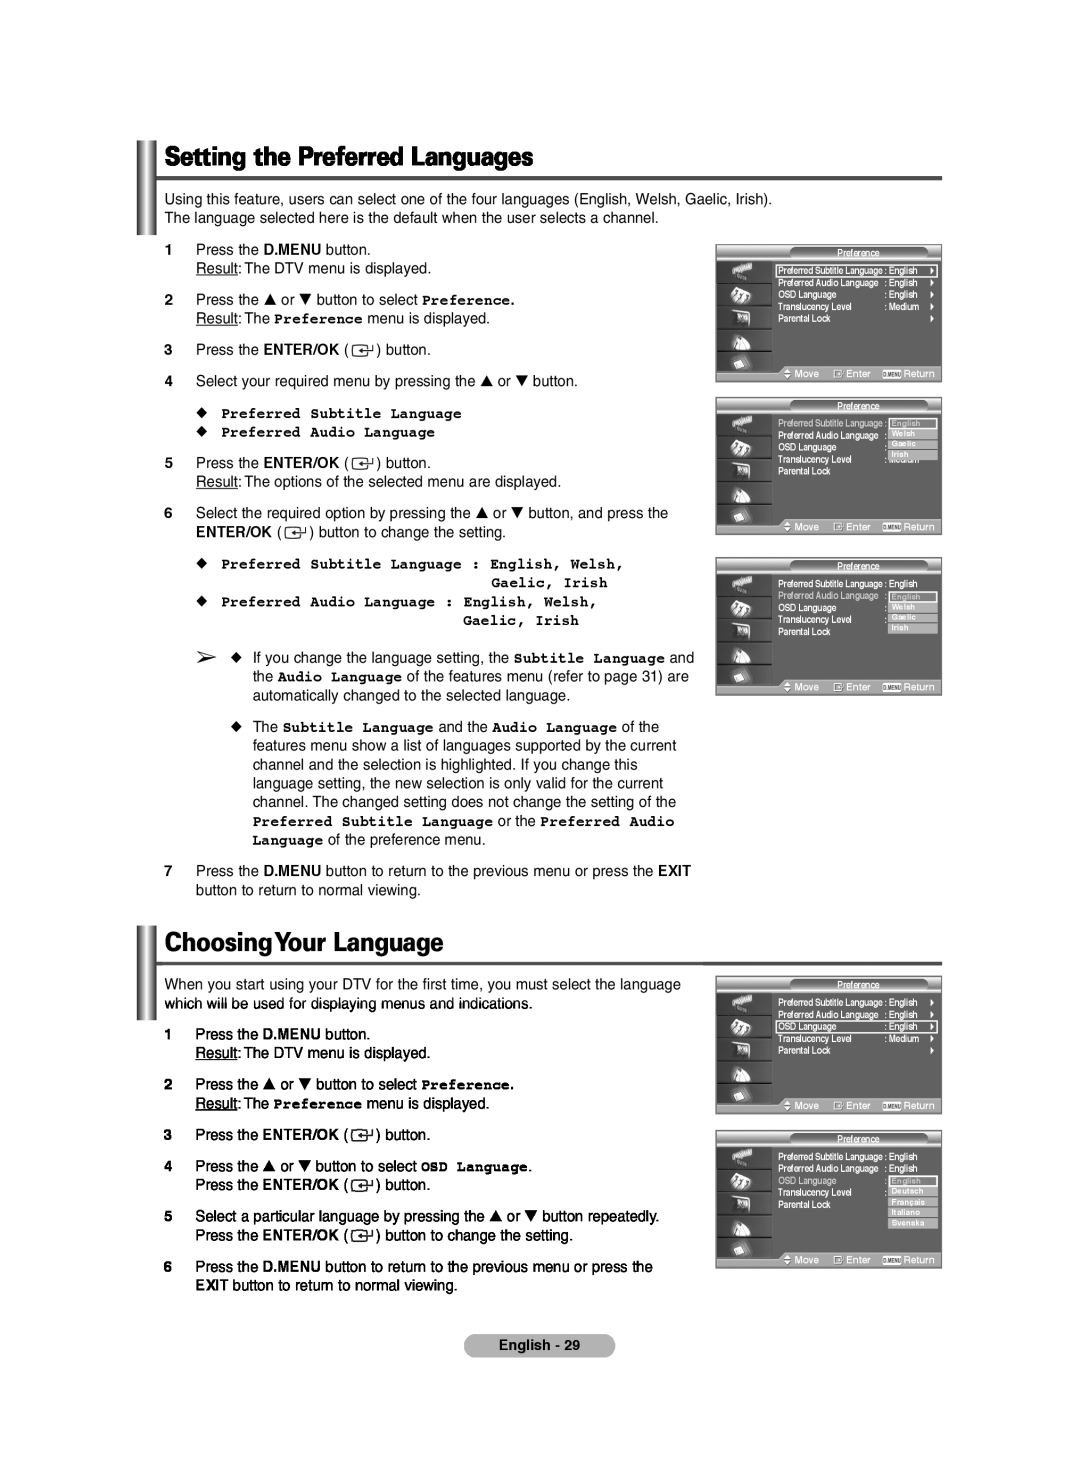 Samsung PS-42E7HD, PS-42E71HD manual Setting the Preferred Languages, ChoosingYour Language 